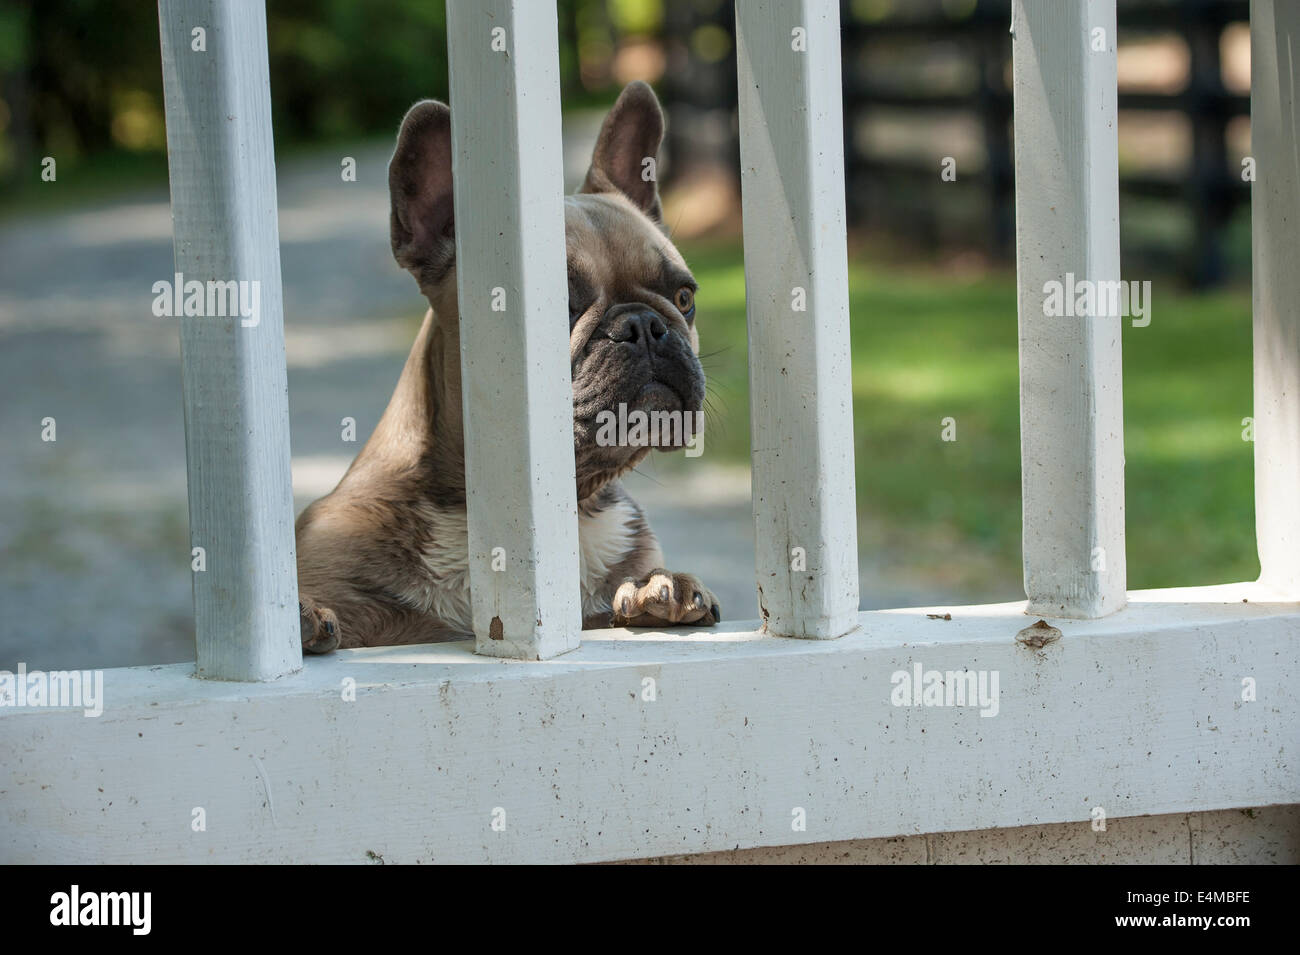 French Bulldog standing and peering through gate bars Stock Photo